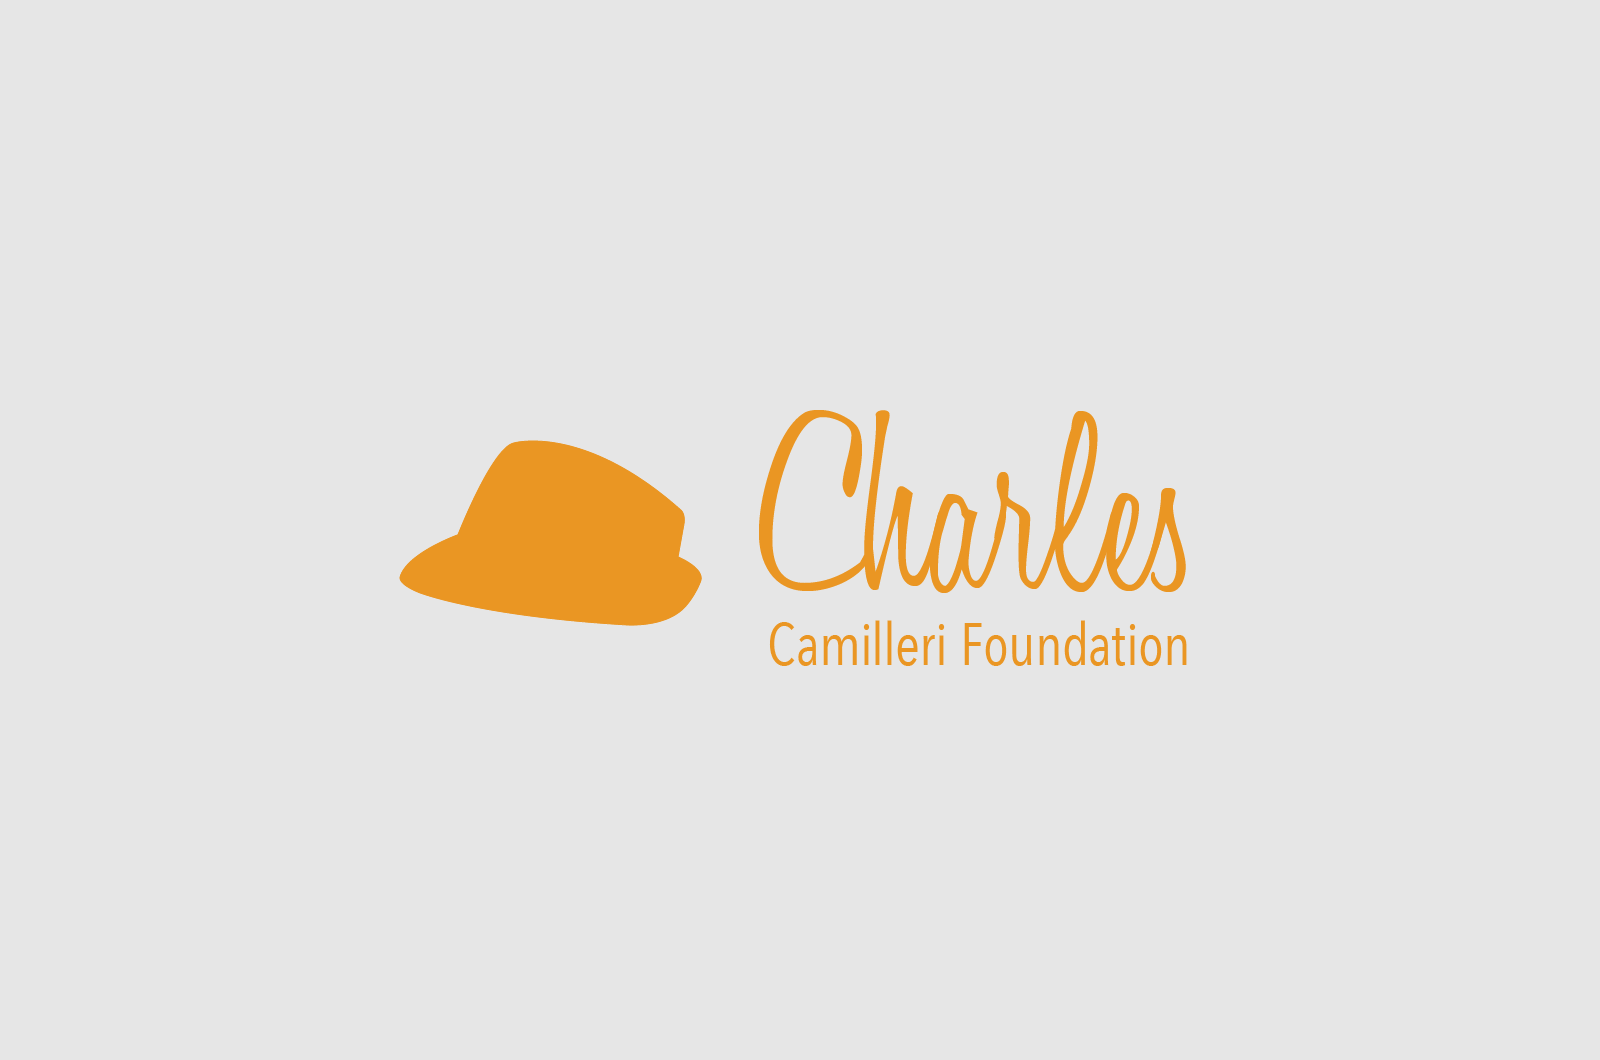 Charles Camilleri Foundation Brand 01 - logo